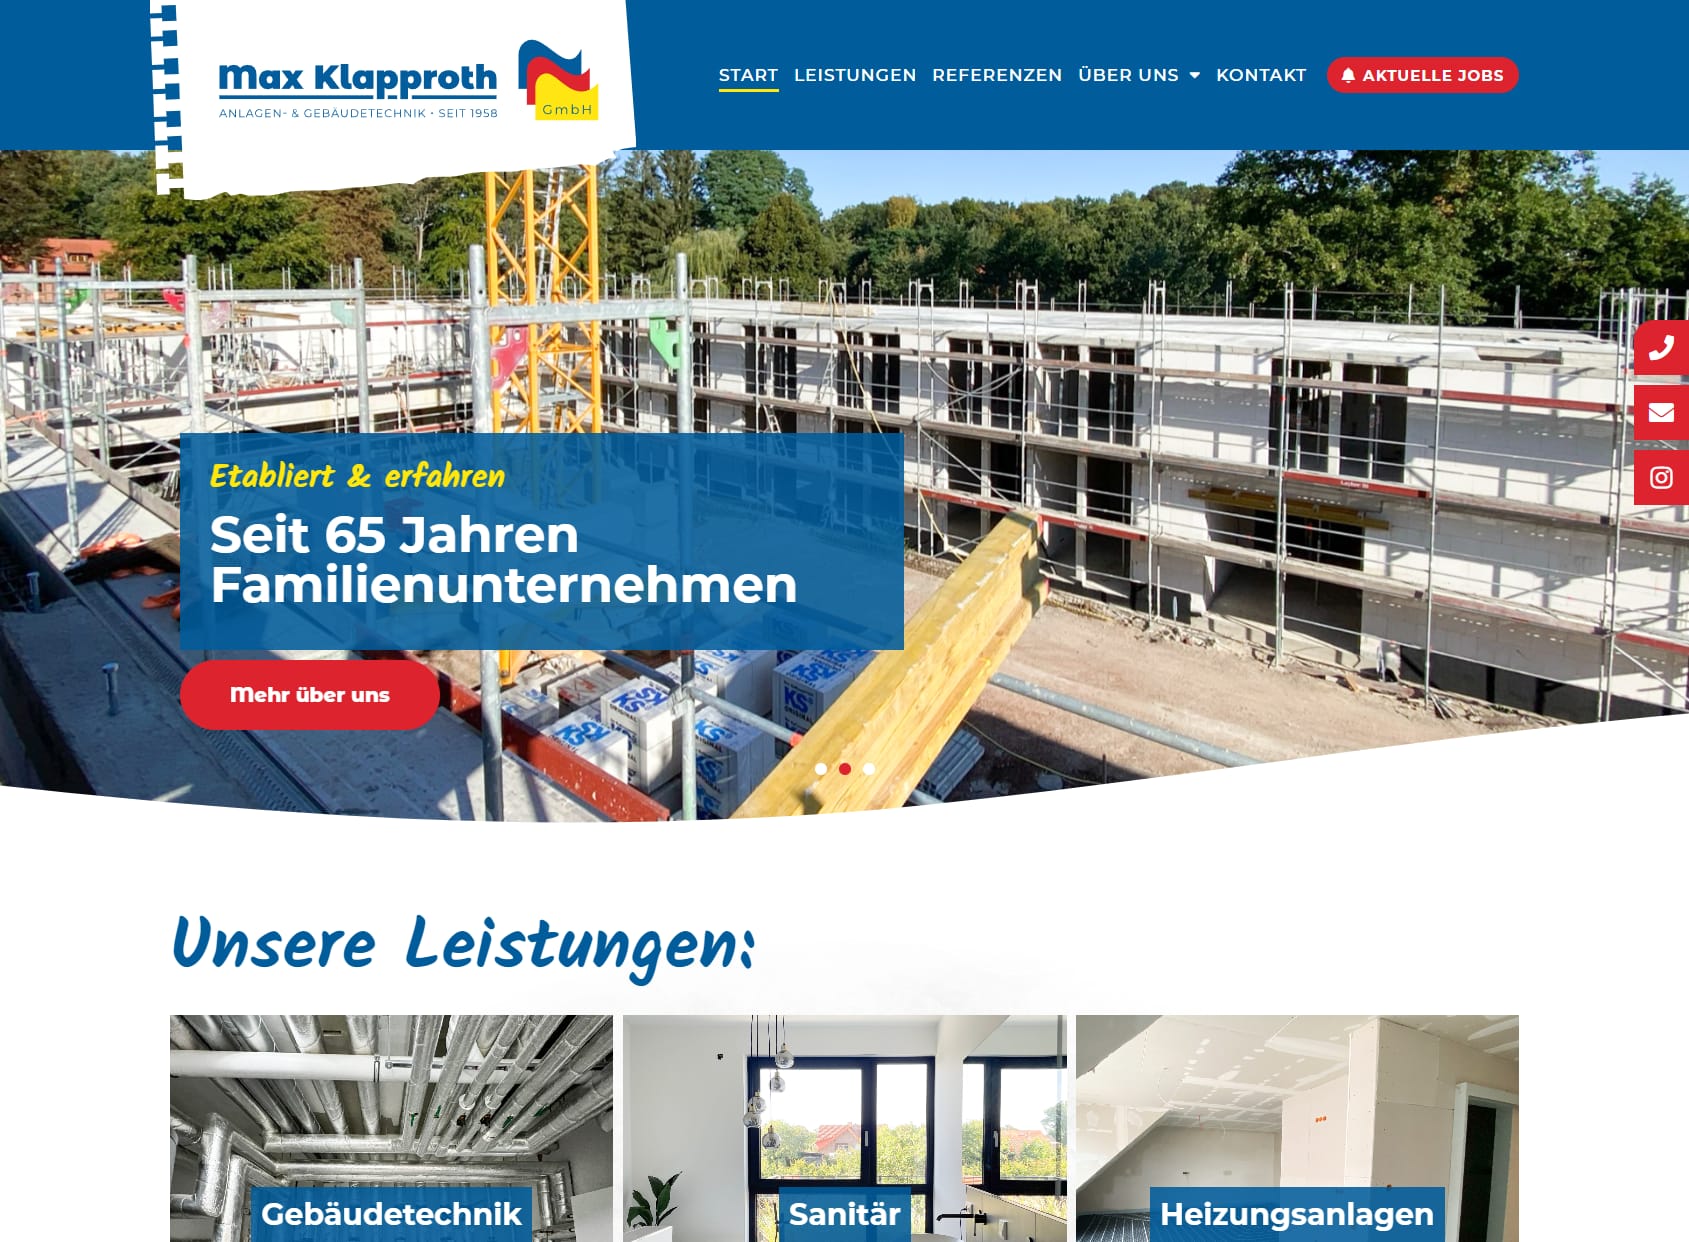 Max Klapproth GmbH